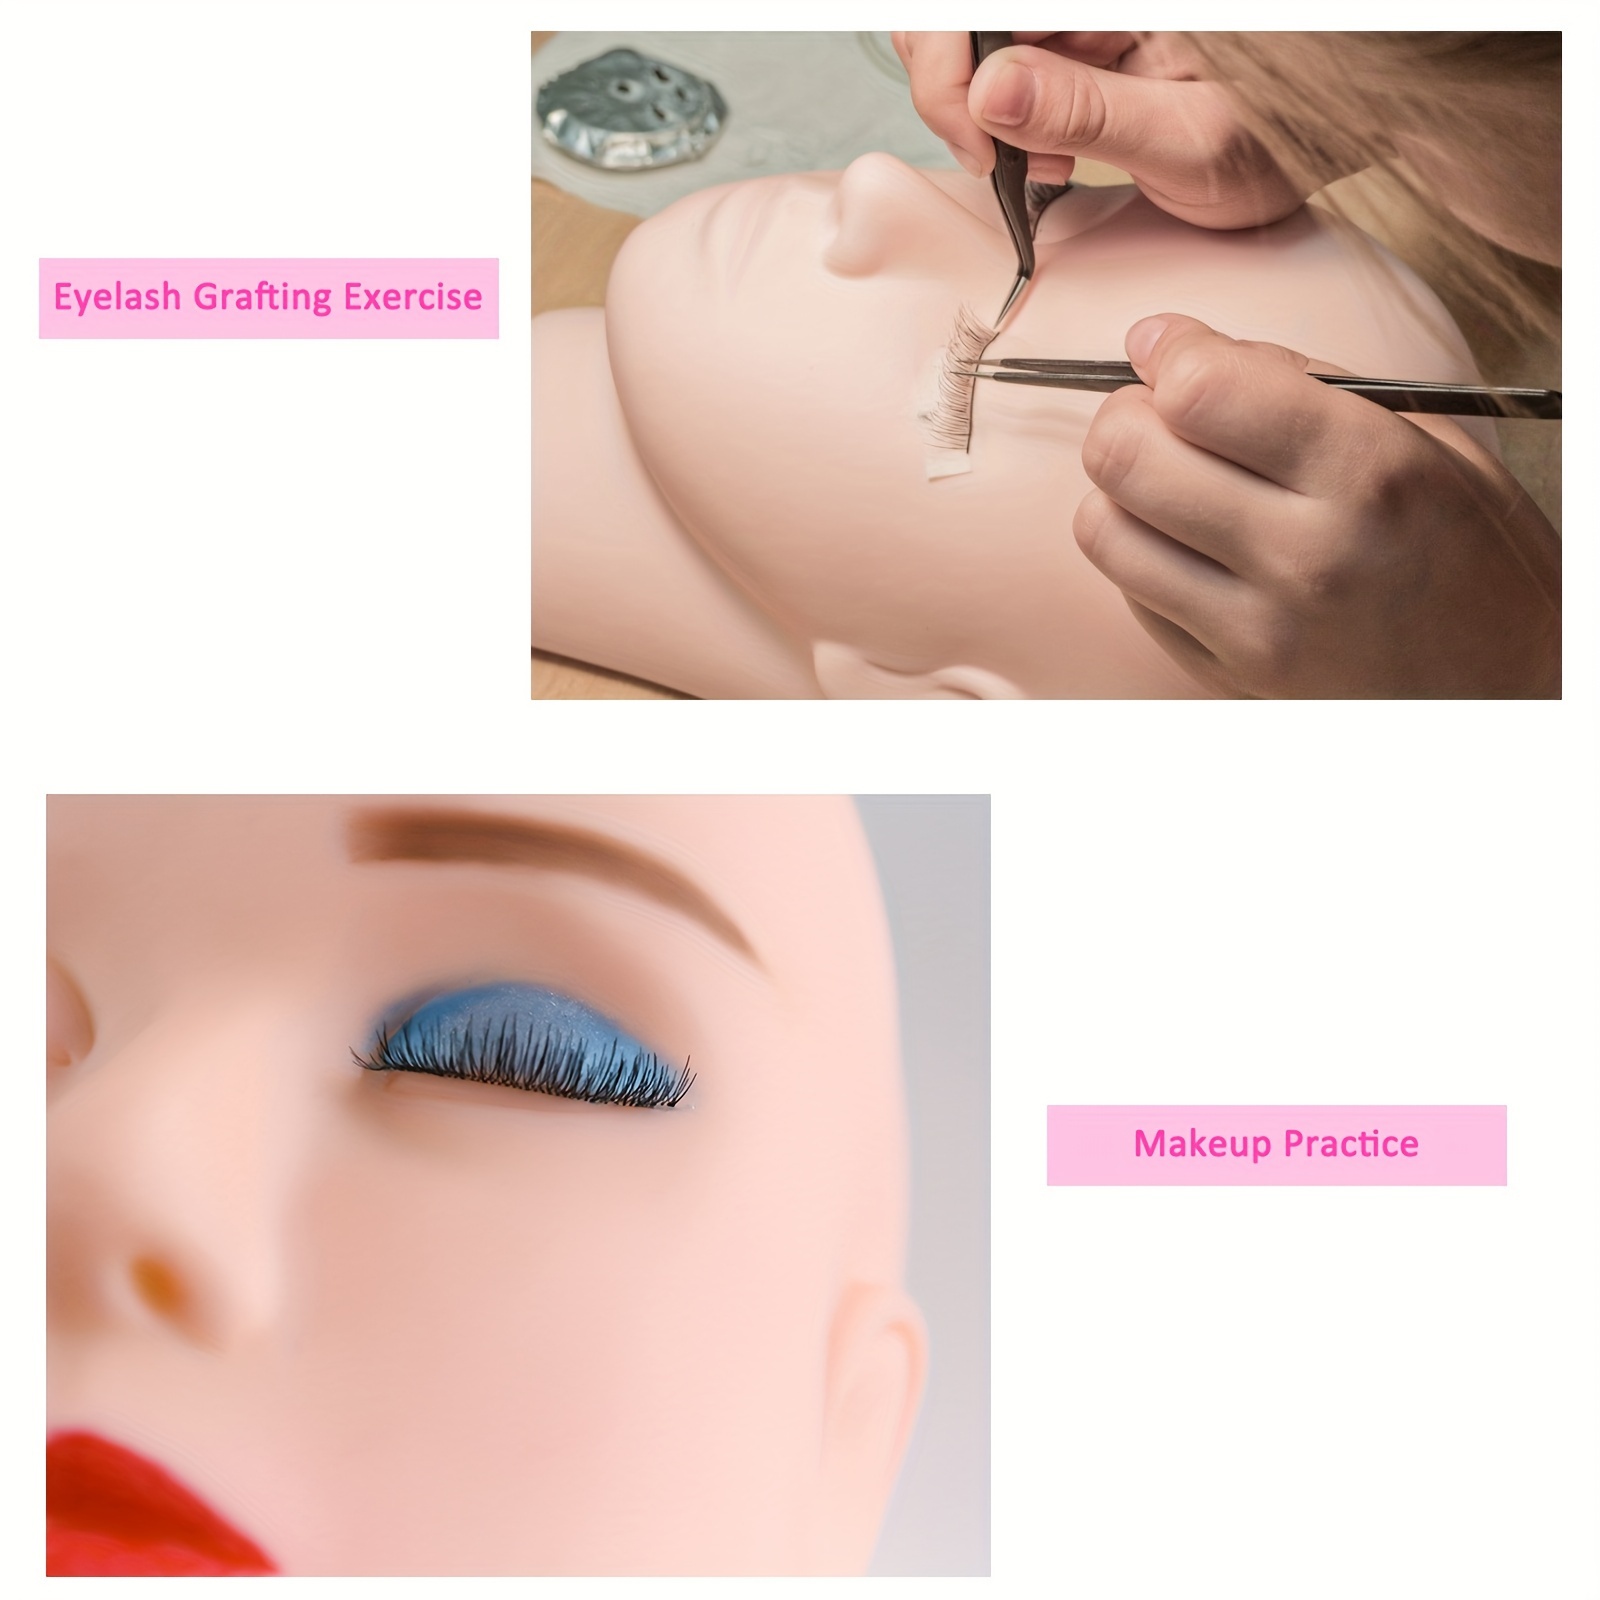 1 Set Mannequin Head with Eyelids Eyelash Practice Silicone Makeup